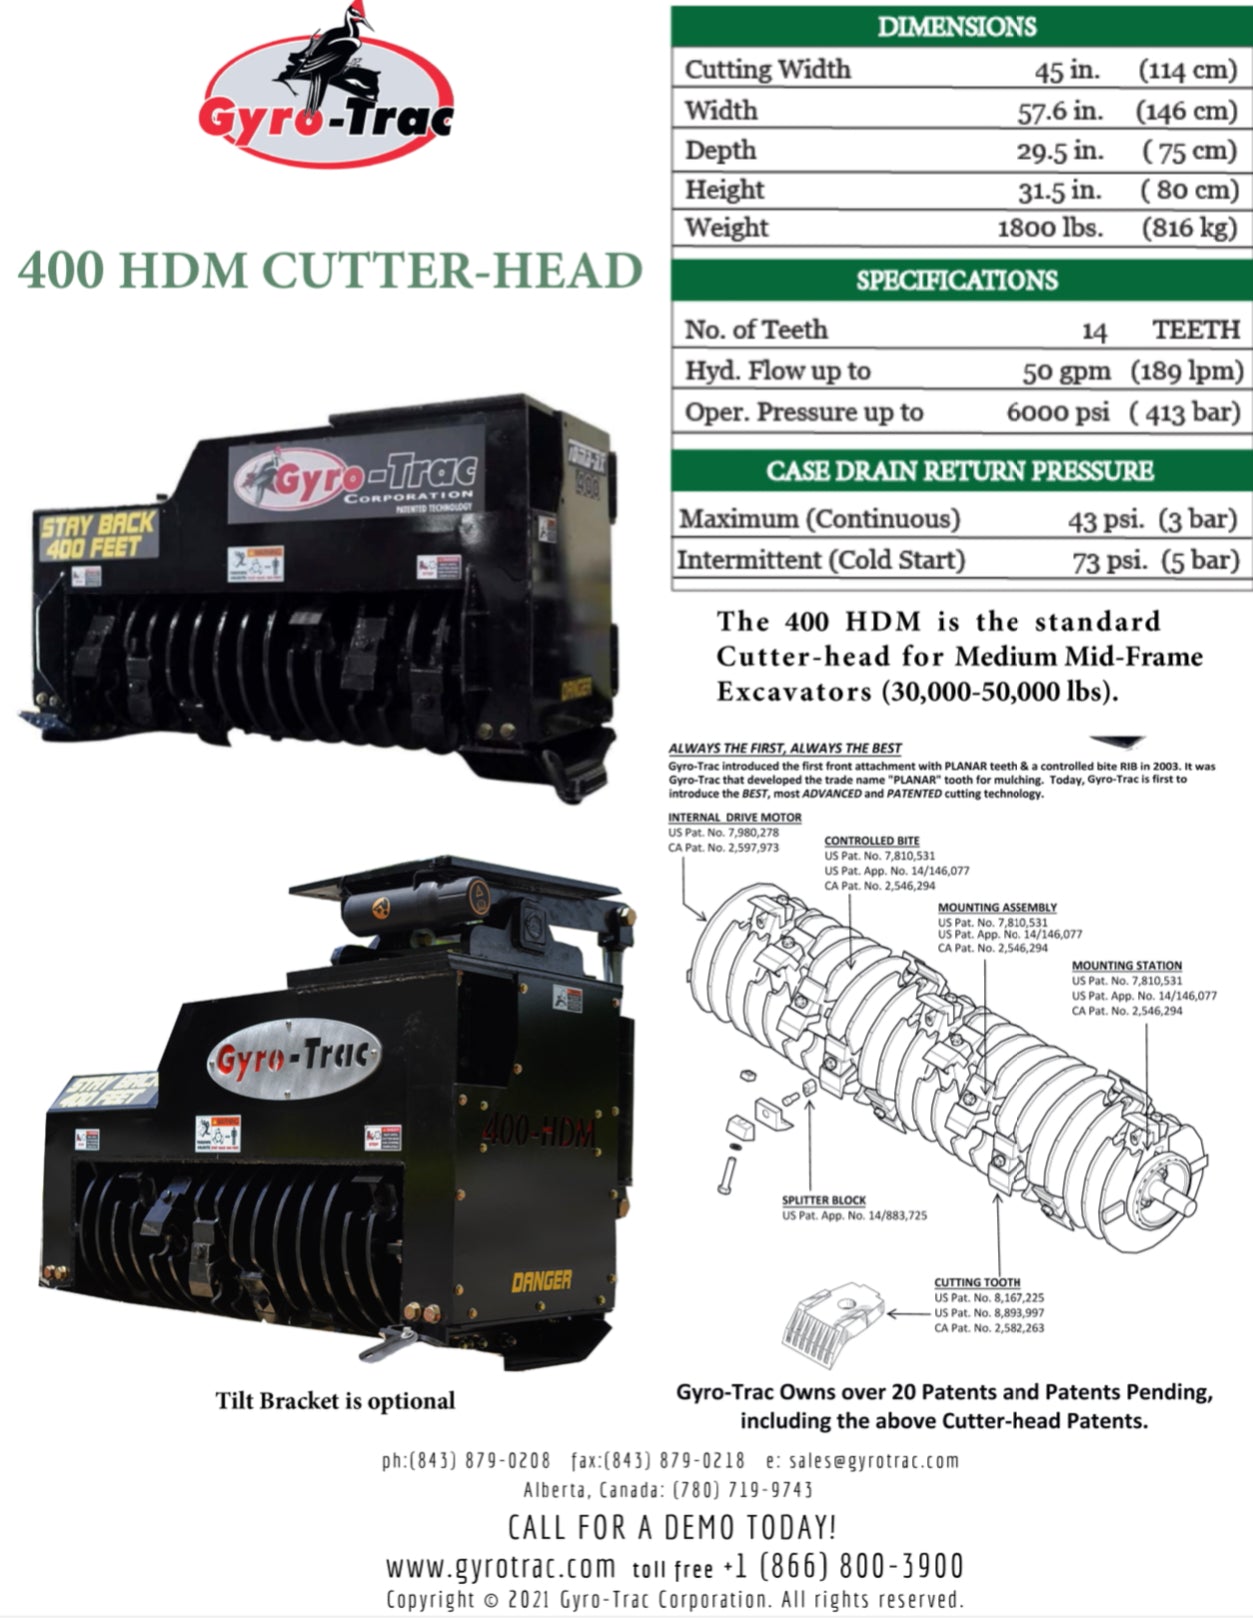 400 HDM Cutter-head